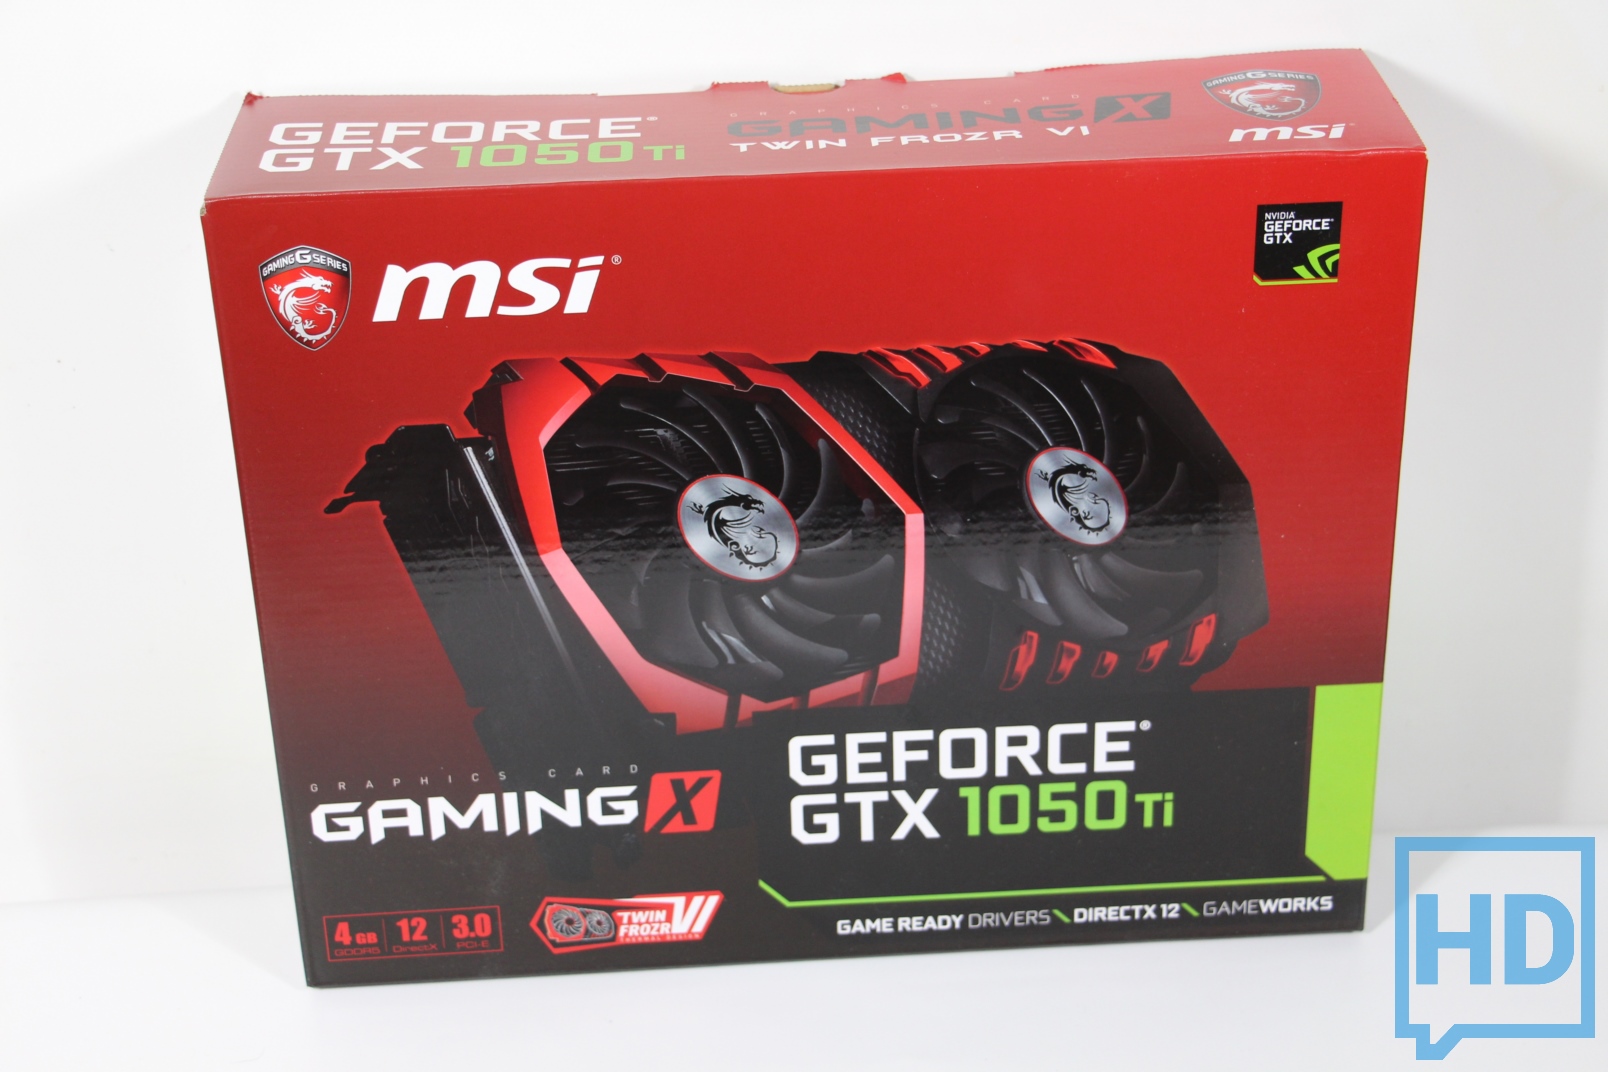 Geforce gtx 1050 gaming x 4g